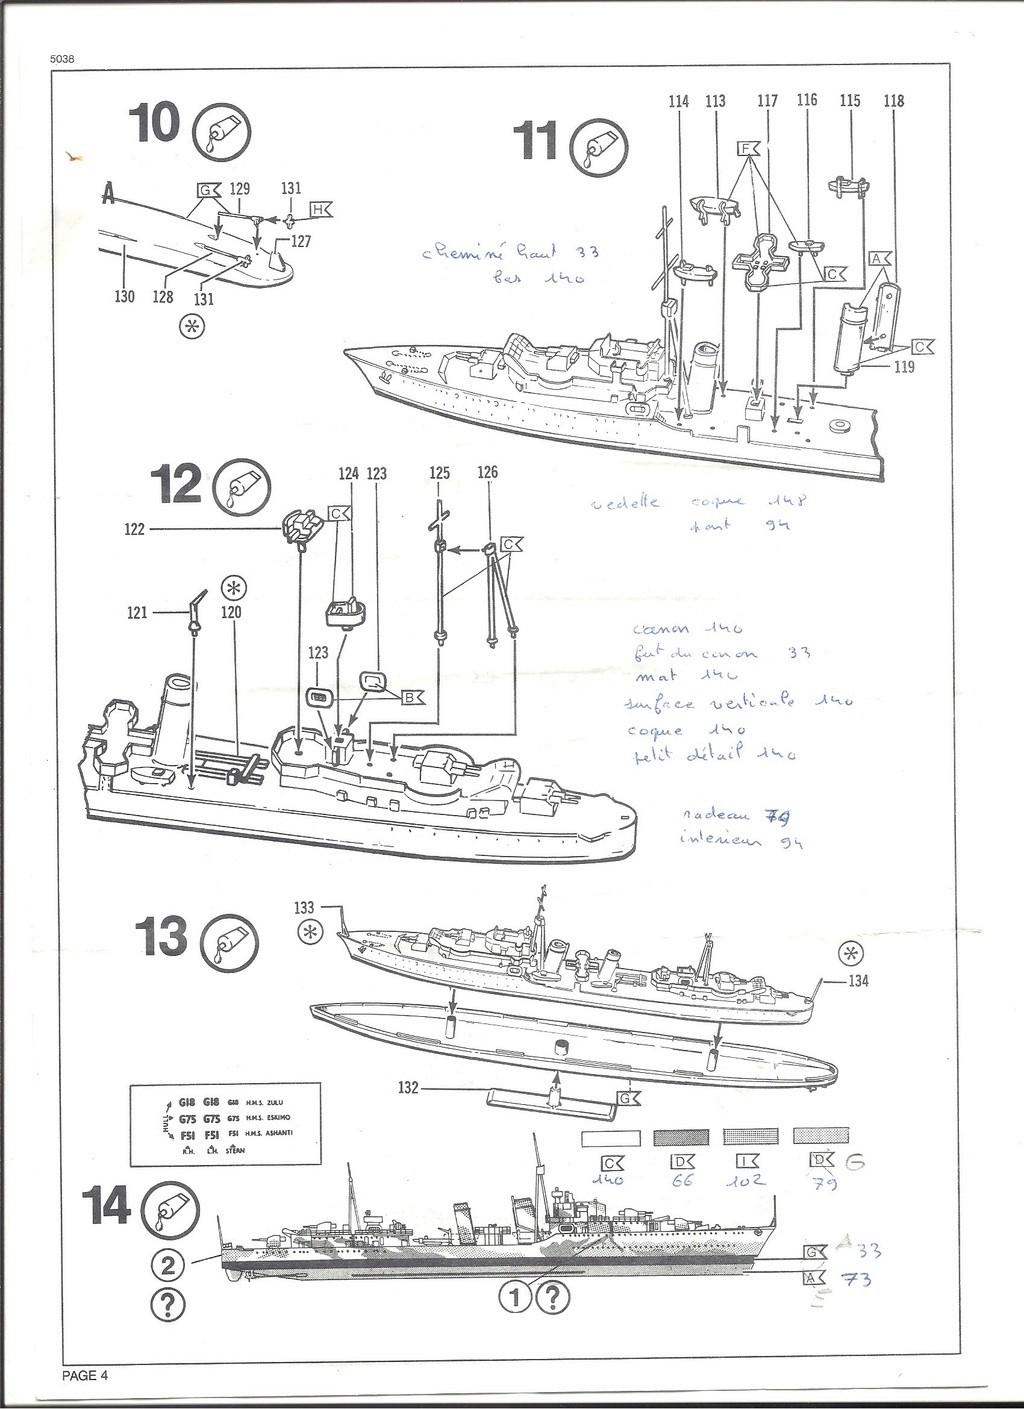 [REVELL] Porte-avions HMS ARK ROYAL & destroyer classe TRIBAL 1/720 Réf 5038 Notice Revell88